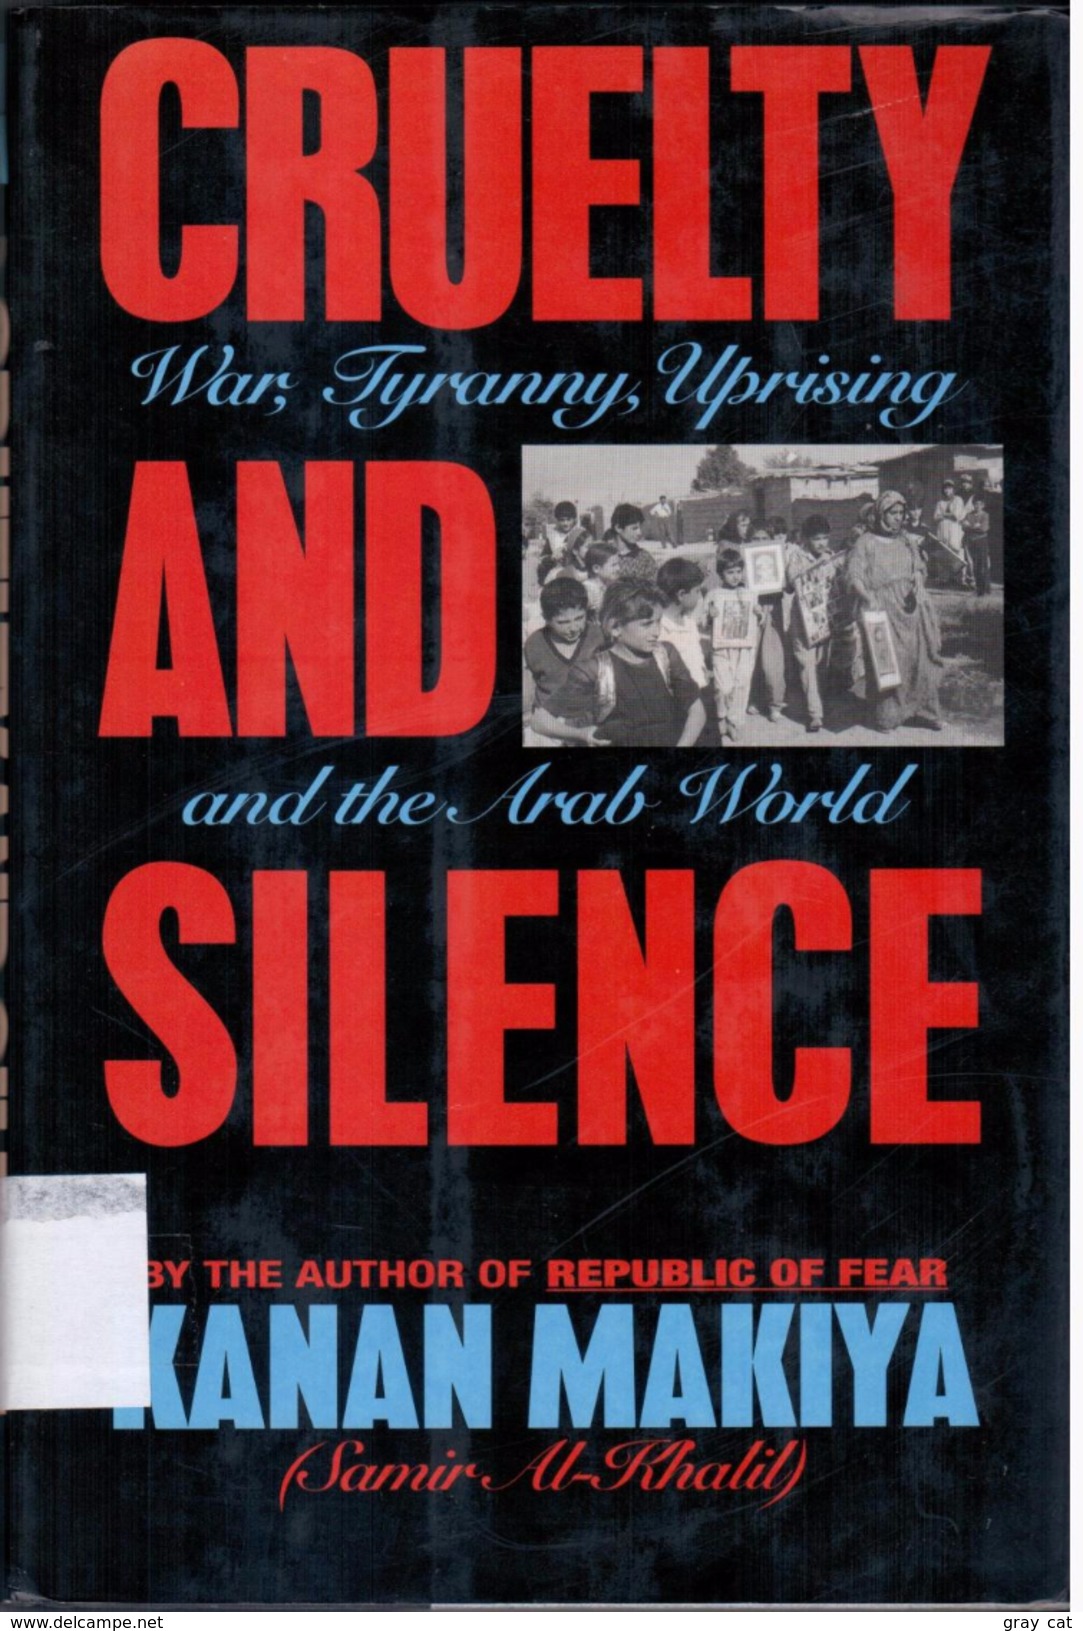 Cruelty And Silence: War, Tyranny, Uprising In The Arab World By Makiya, Kanan (ISBN 9780393031089) - Midden-Oosten